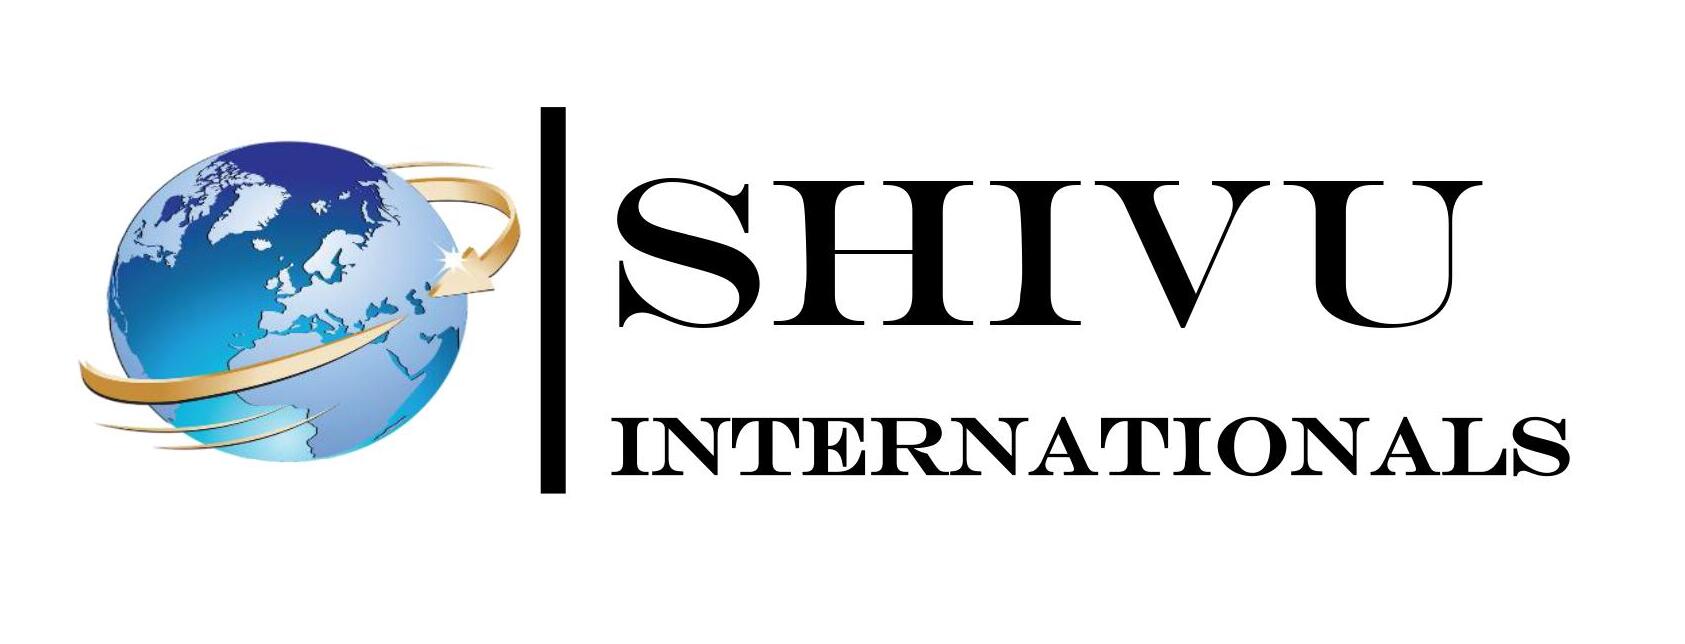 SHIVU INTERNATIONALS